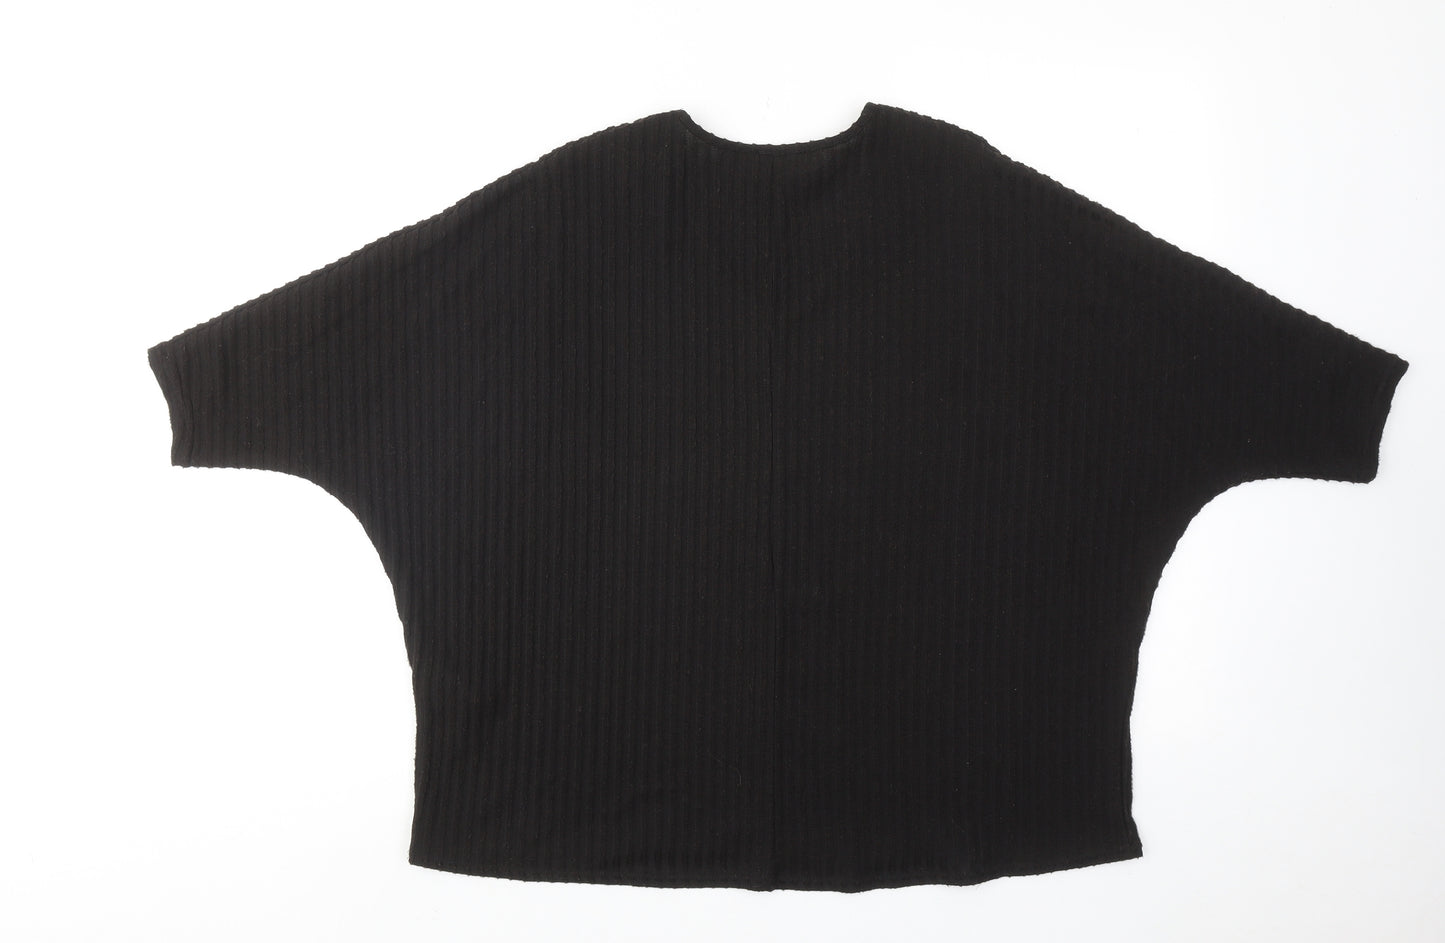 New Look Womens Black Polyester Basic Blouse Size S V-Neck